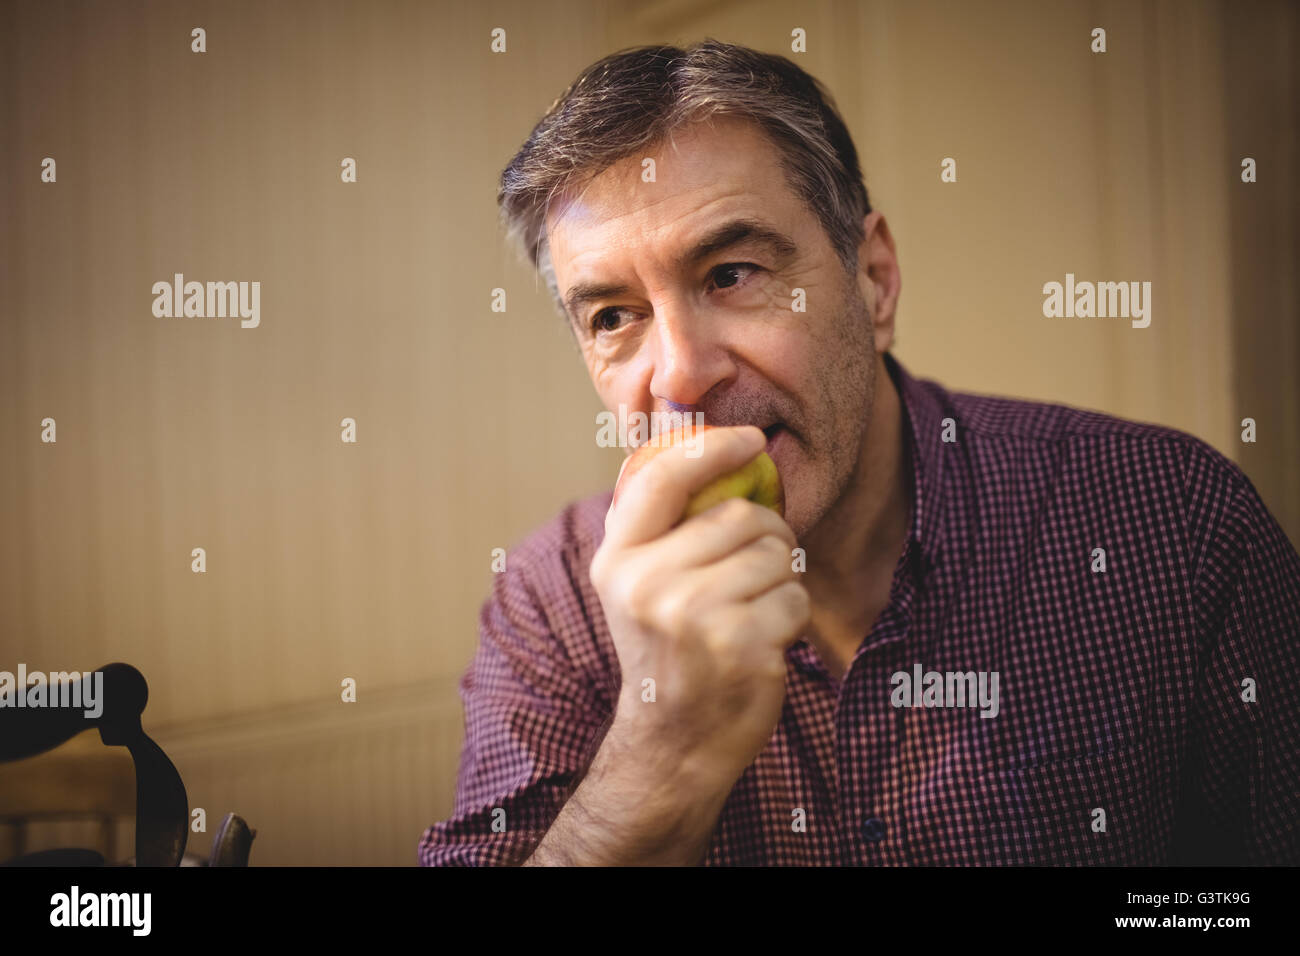 Mature man eating an apple Stock Photo